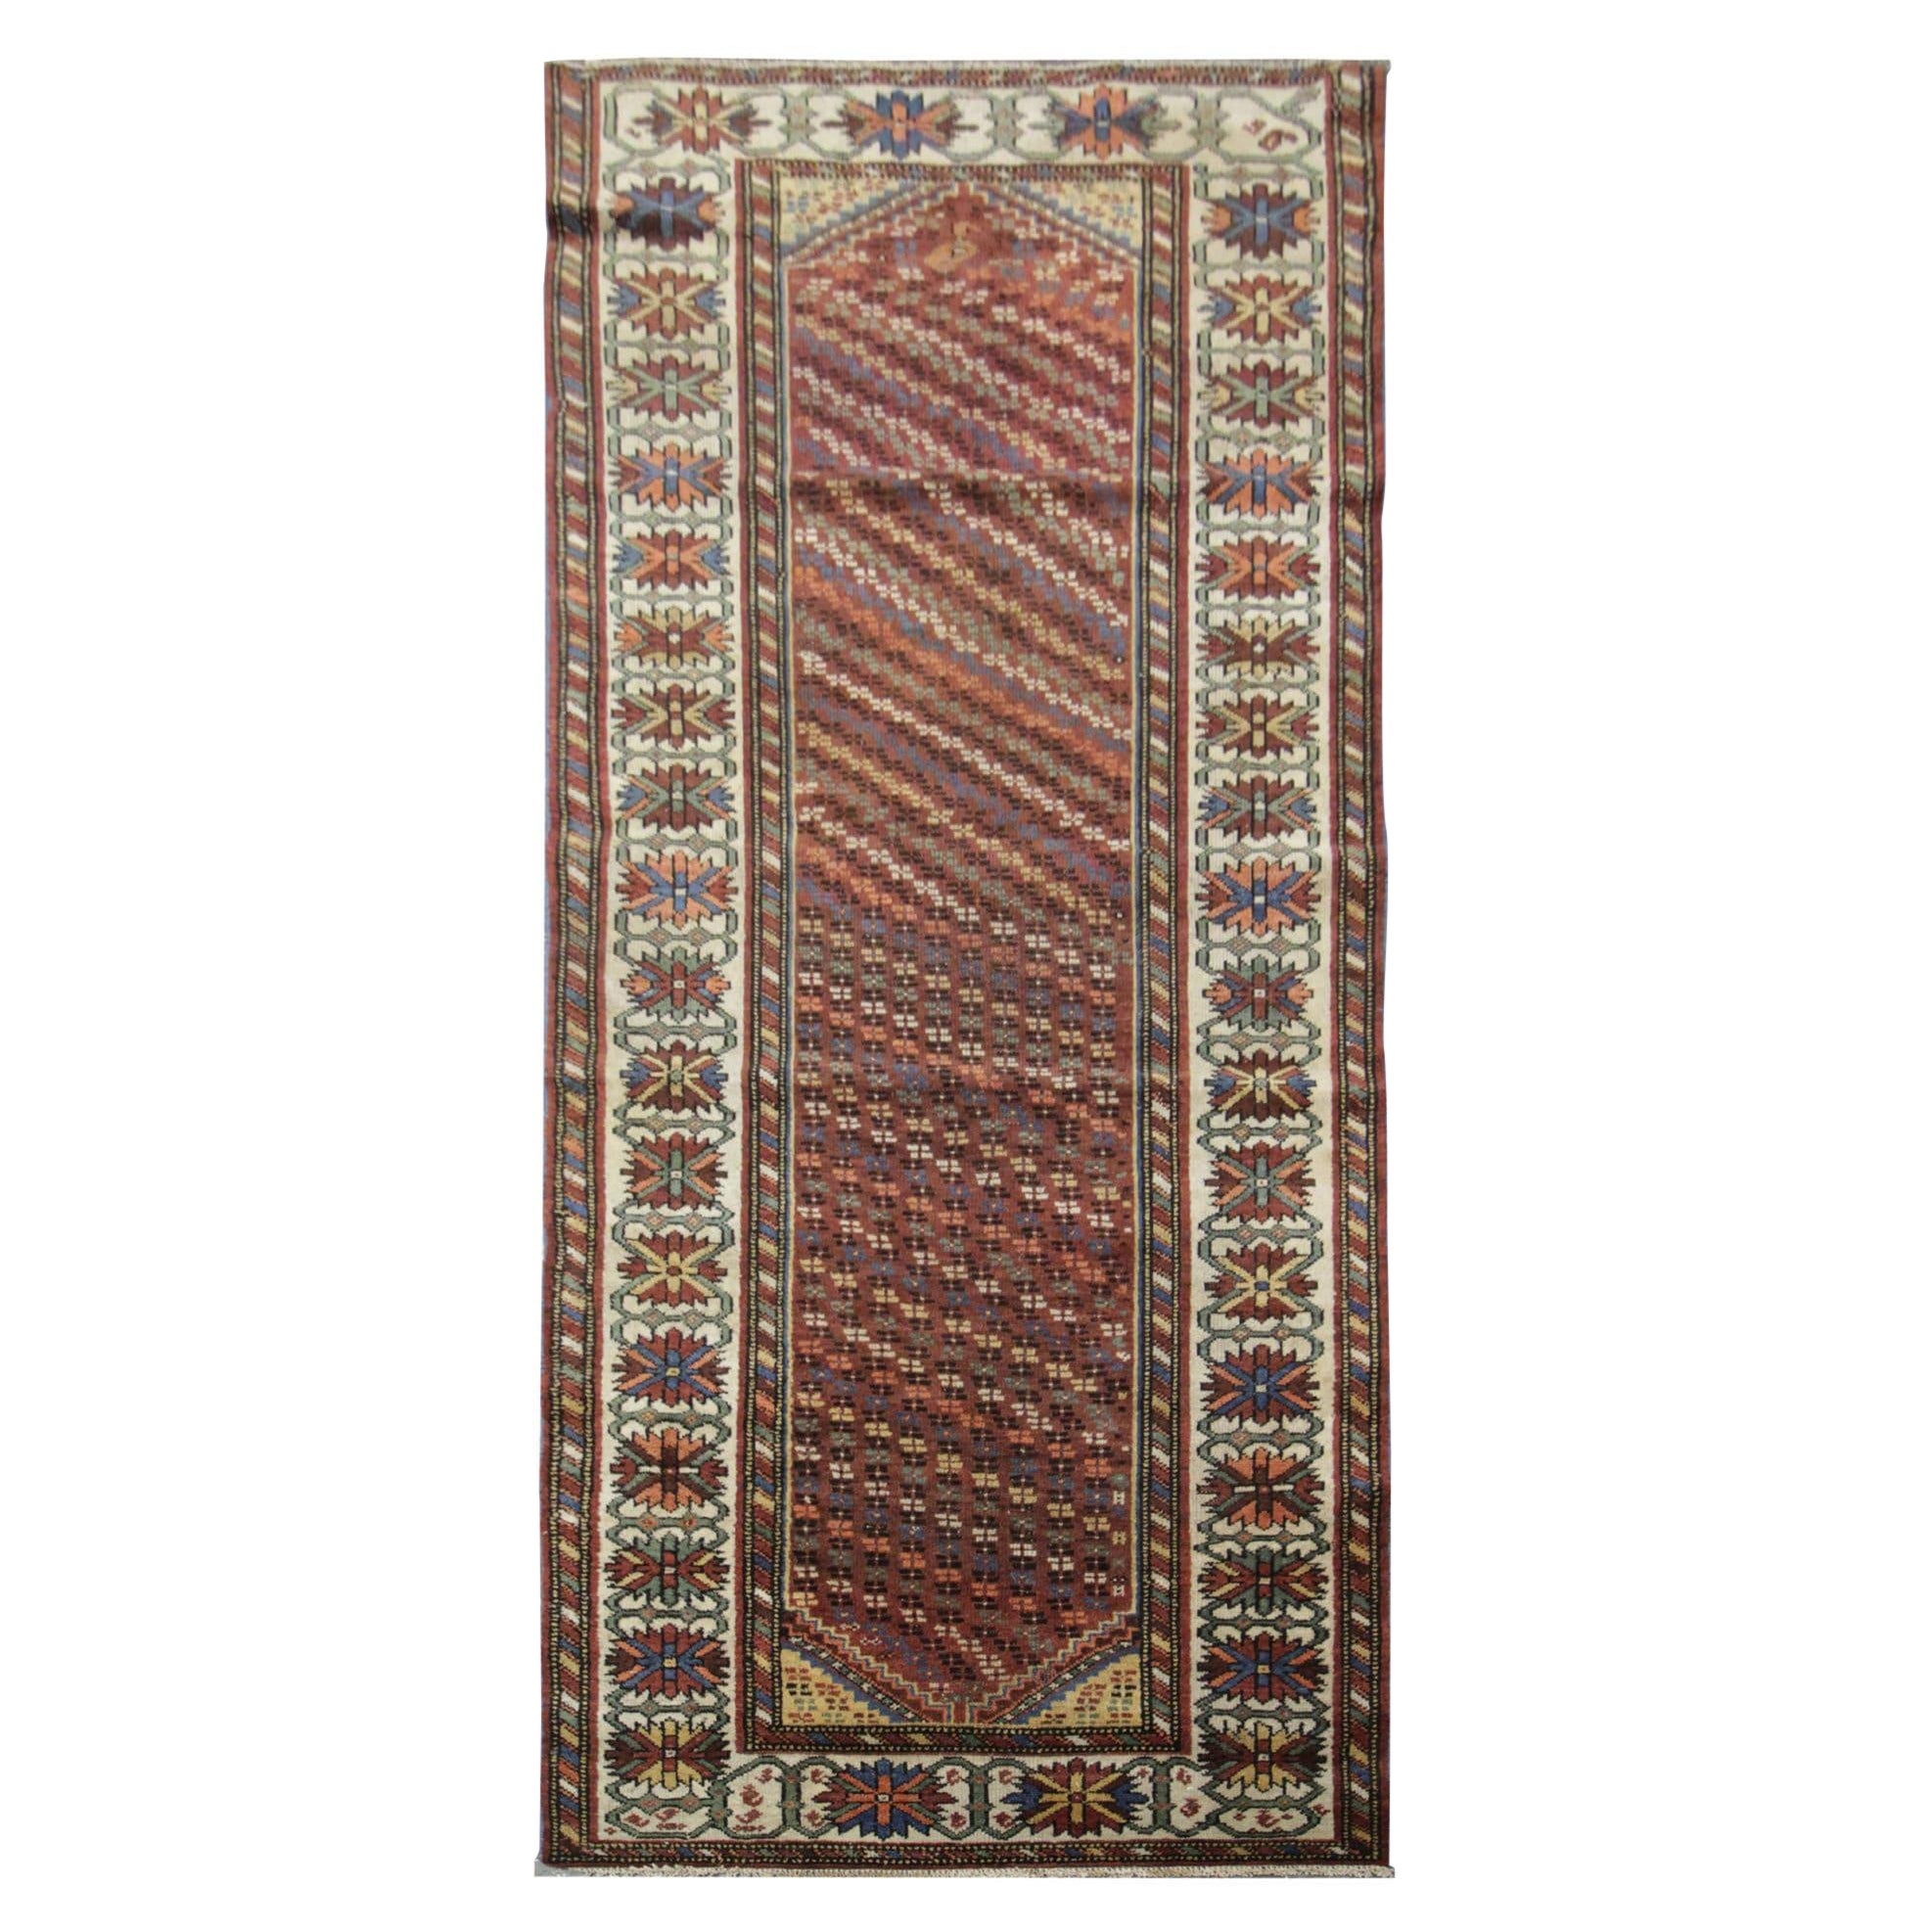 Antique Oriental Wool Living Room Runner Rug Striped Handmade Carpet 